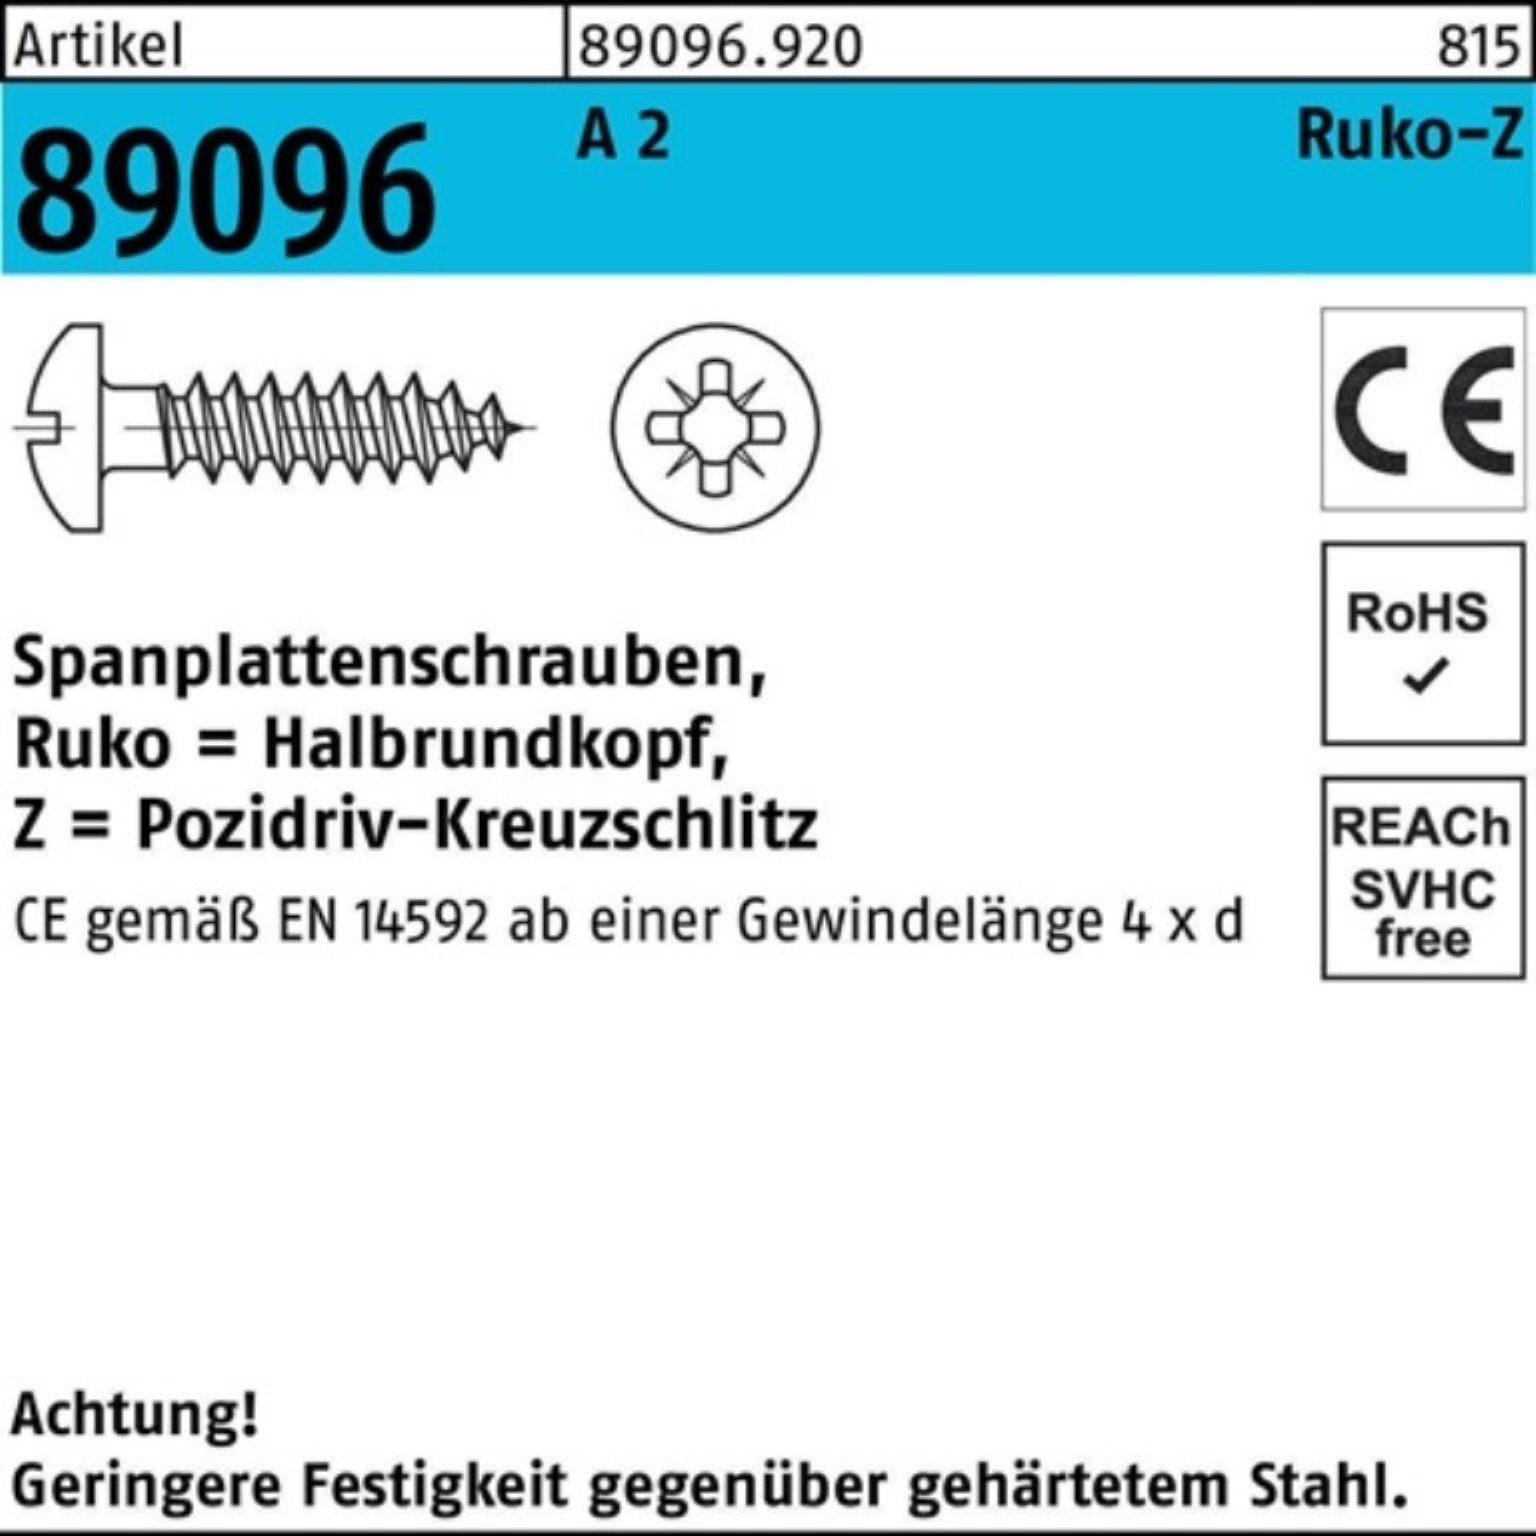 Pack A Reyher Spanplattenschraube PZ 1000er HAKO Spanplattenschraube 40-Z R 2 89096 5x Stüc 1000